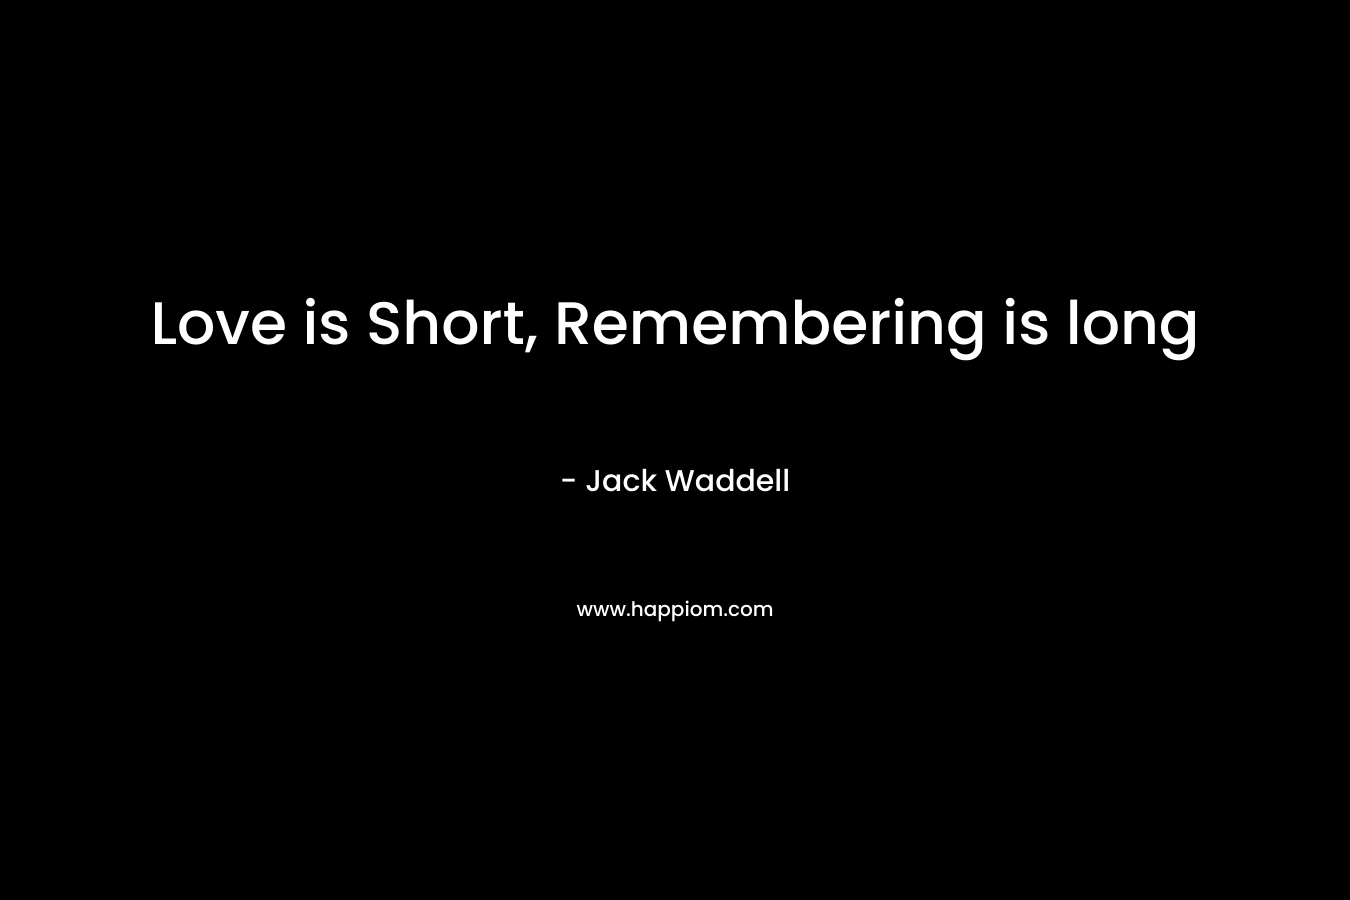 Love is Short, Remembering is long